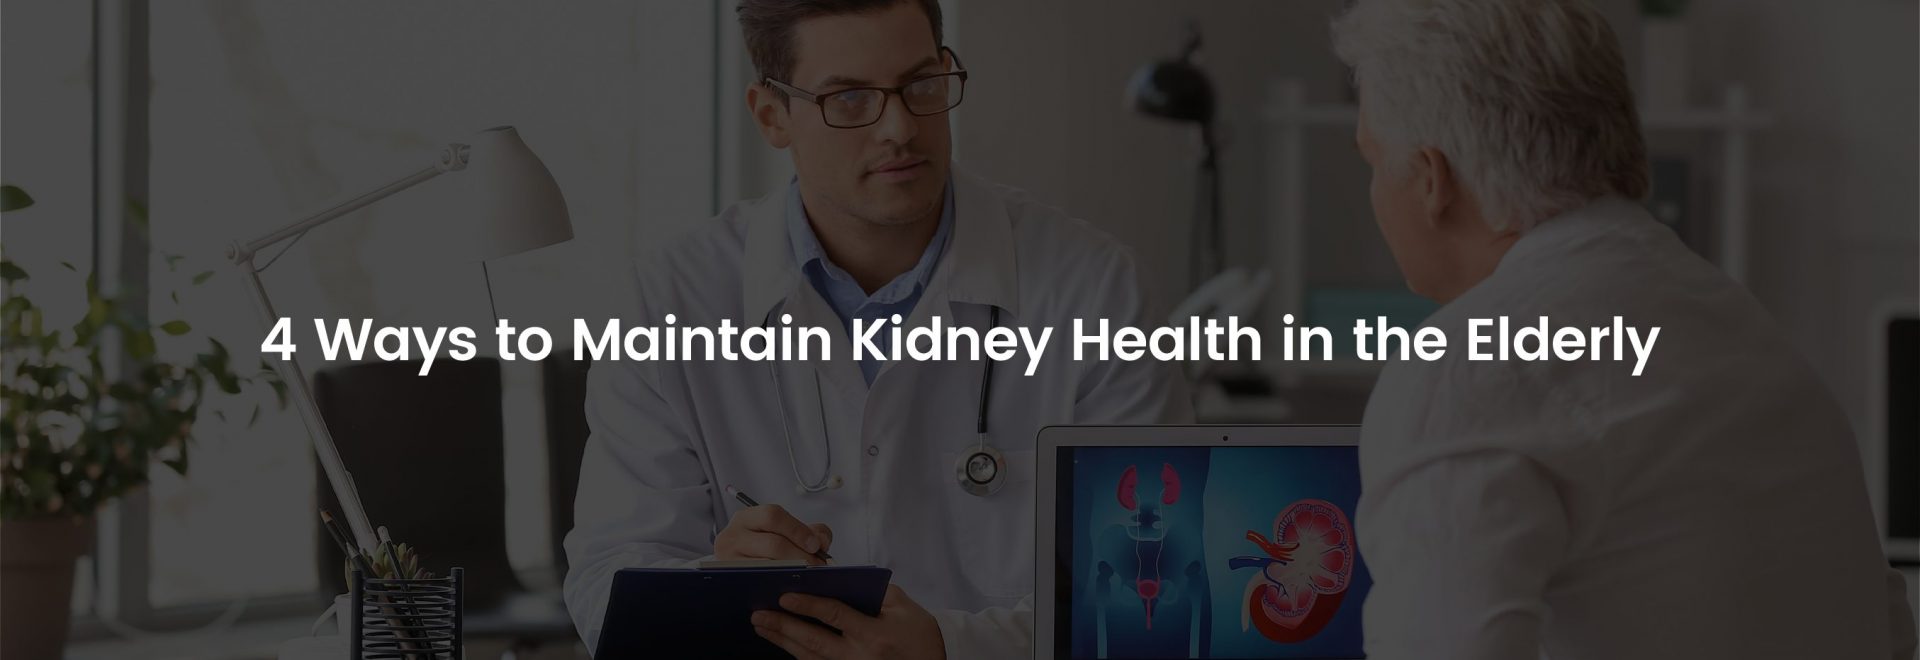 4 Ways to Maintain Kidney Health in the Elderly | Banner Image